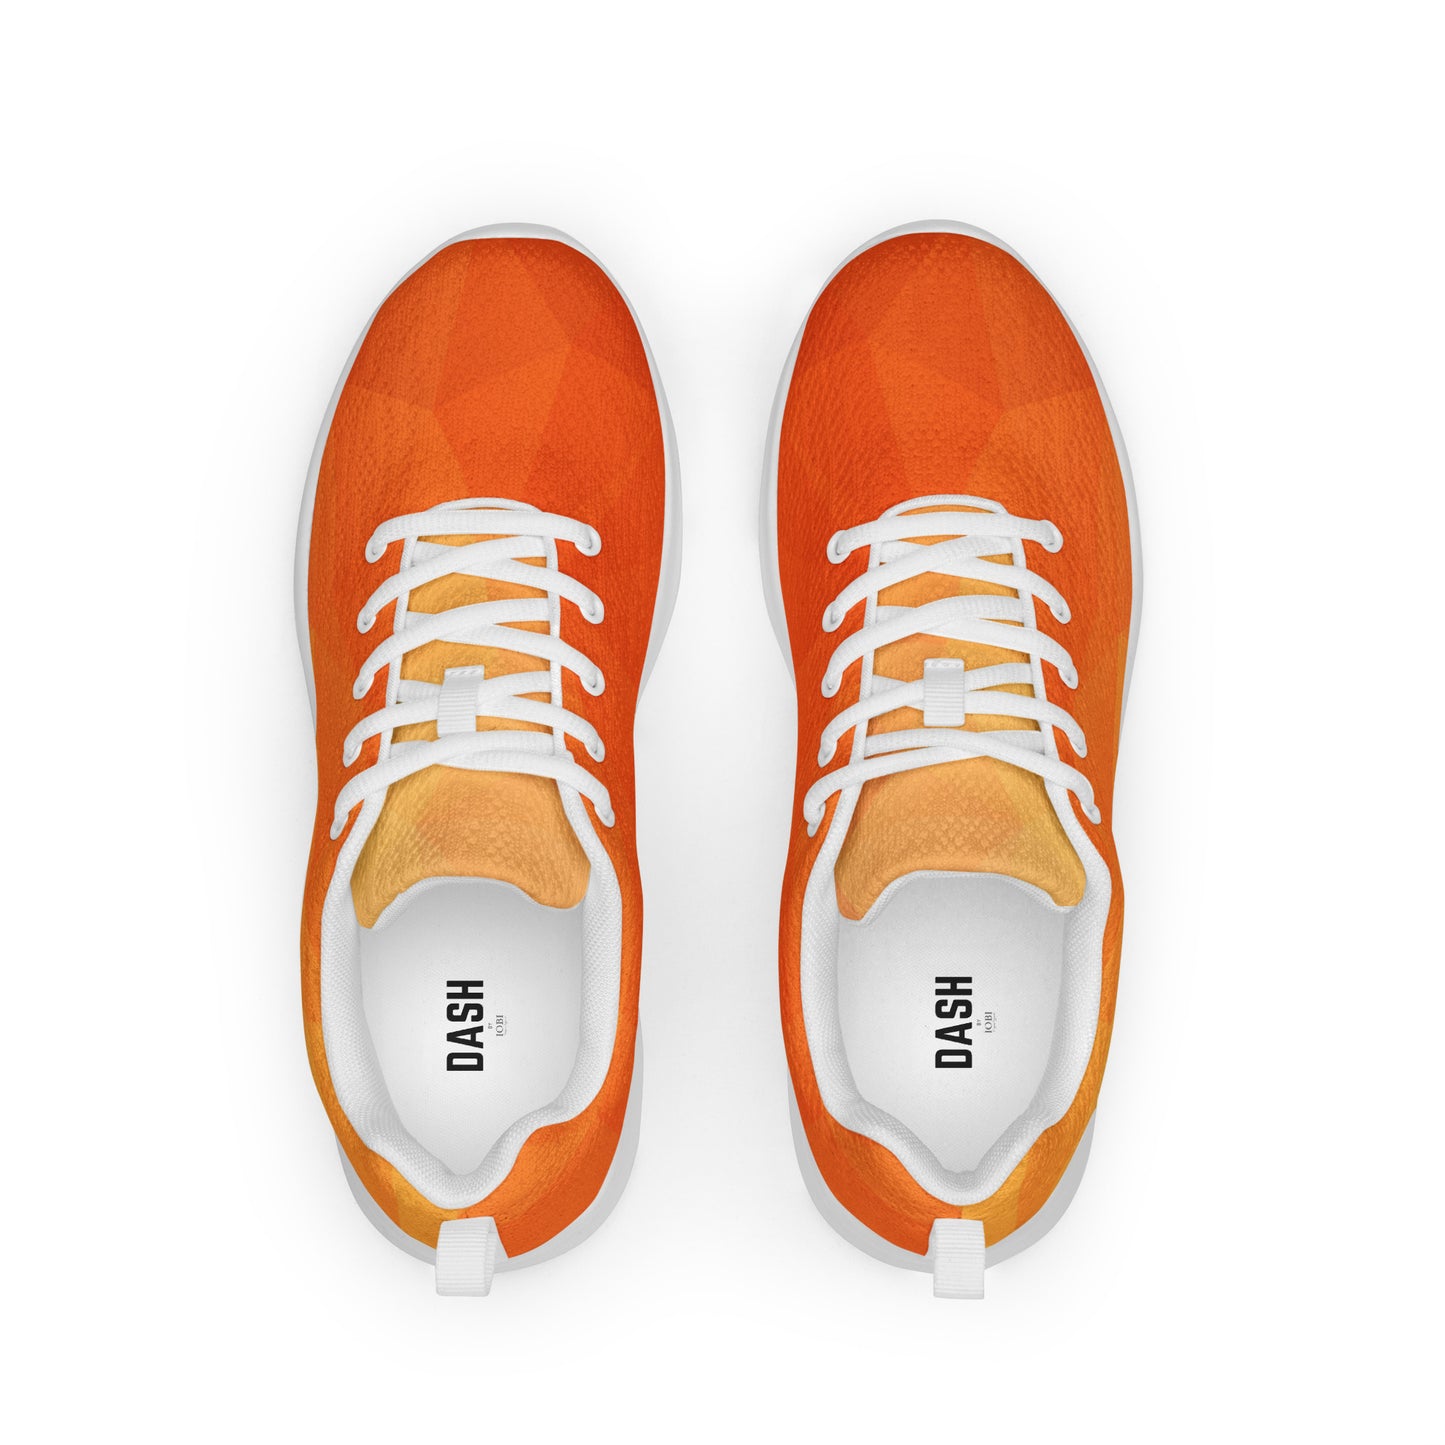 DASH Geo Orange Men’s Athletic Shoes Lightweight Breathable Design by IOBI Original Apparel